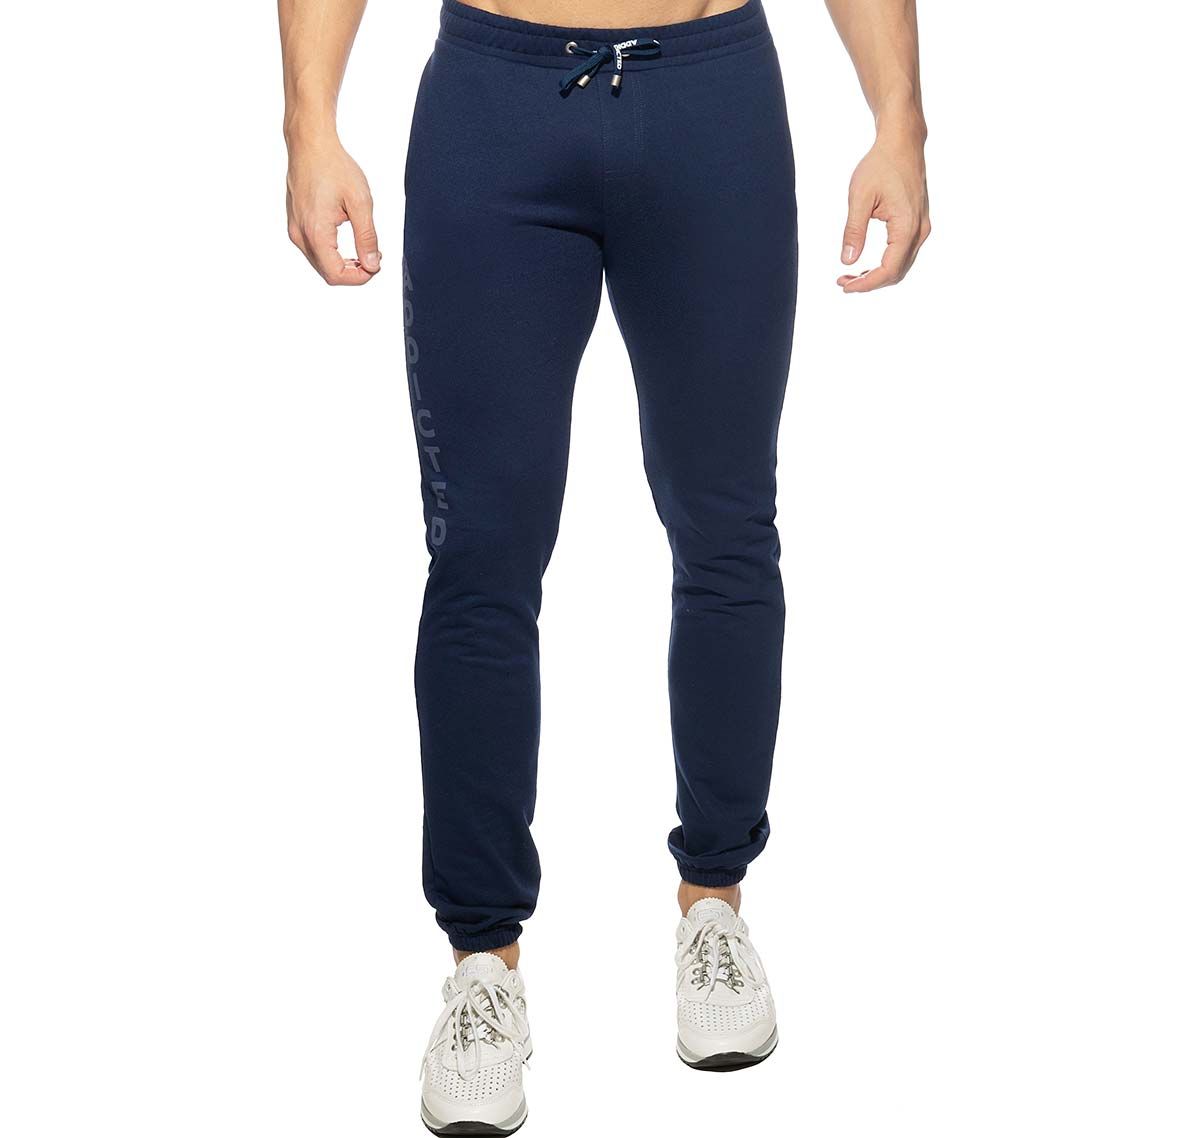 Addicted Pantaloni sportivi lunghi LONG JOGGING PANTS AD999, blu marino